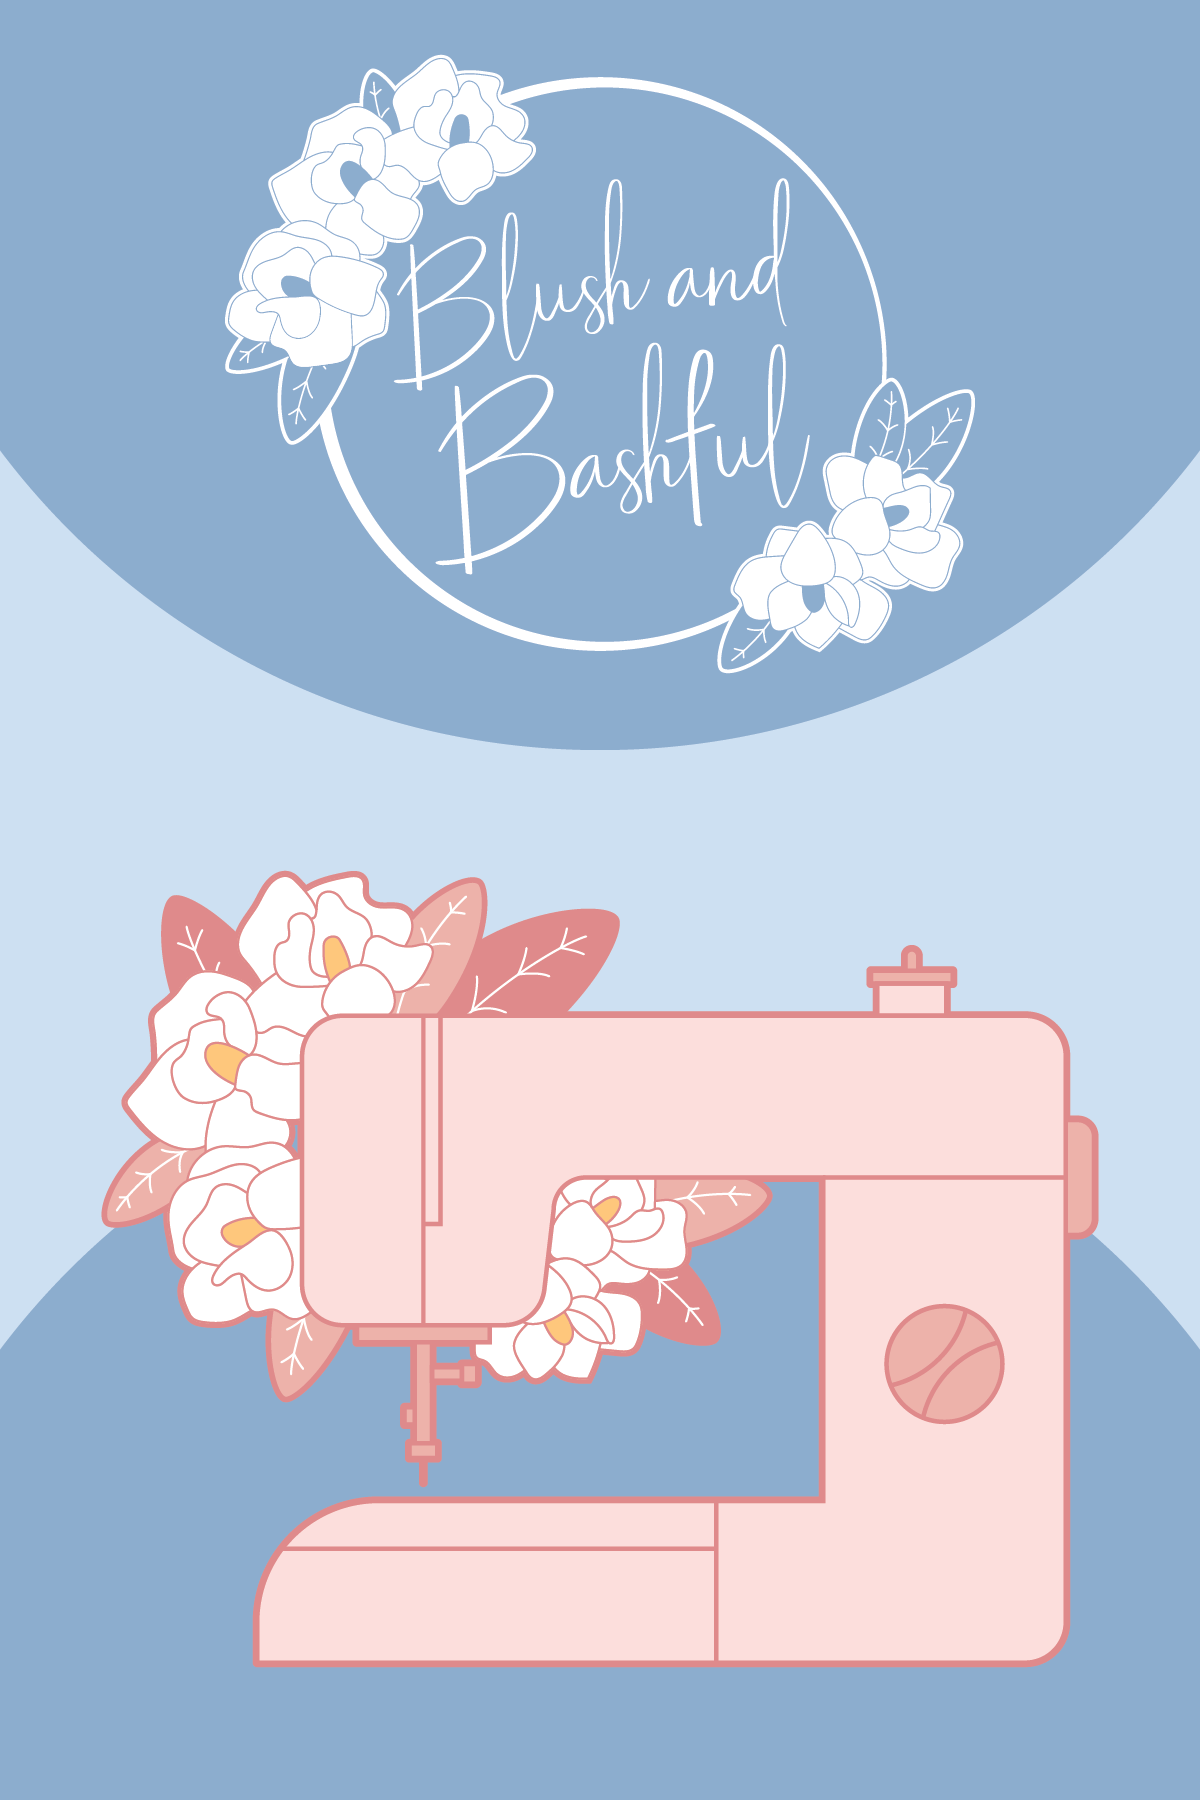 Blush and Bashful_2_Illustration.png